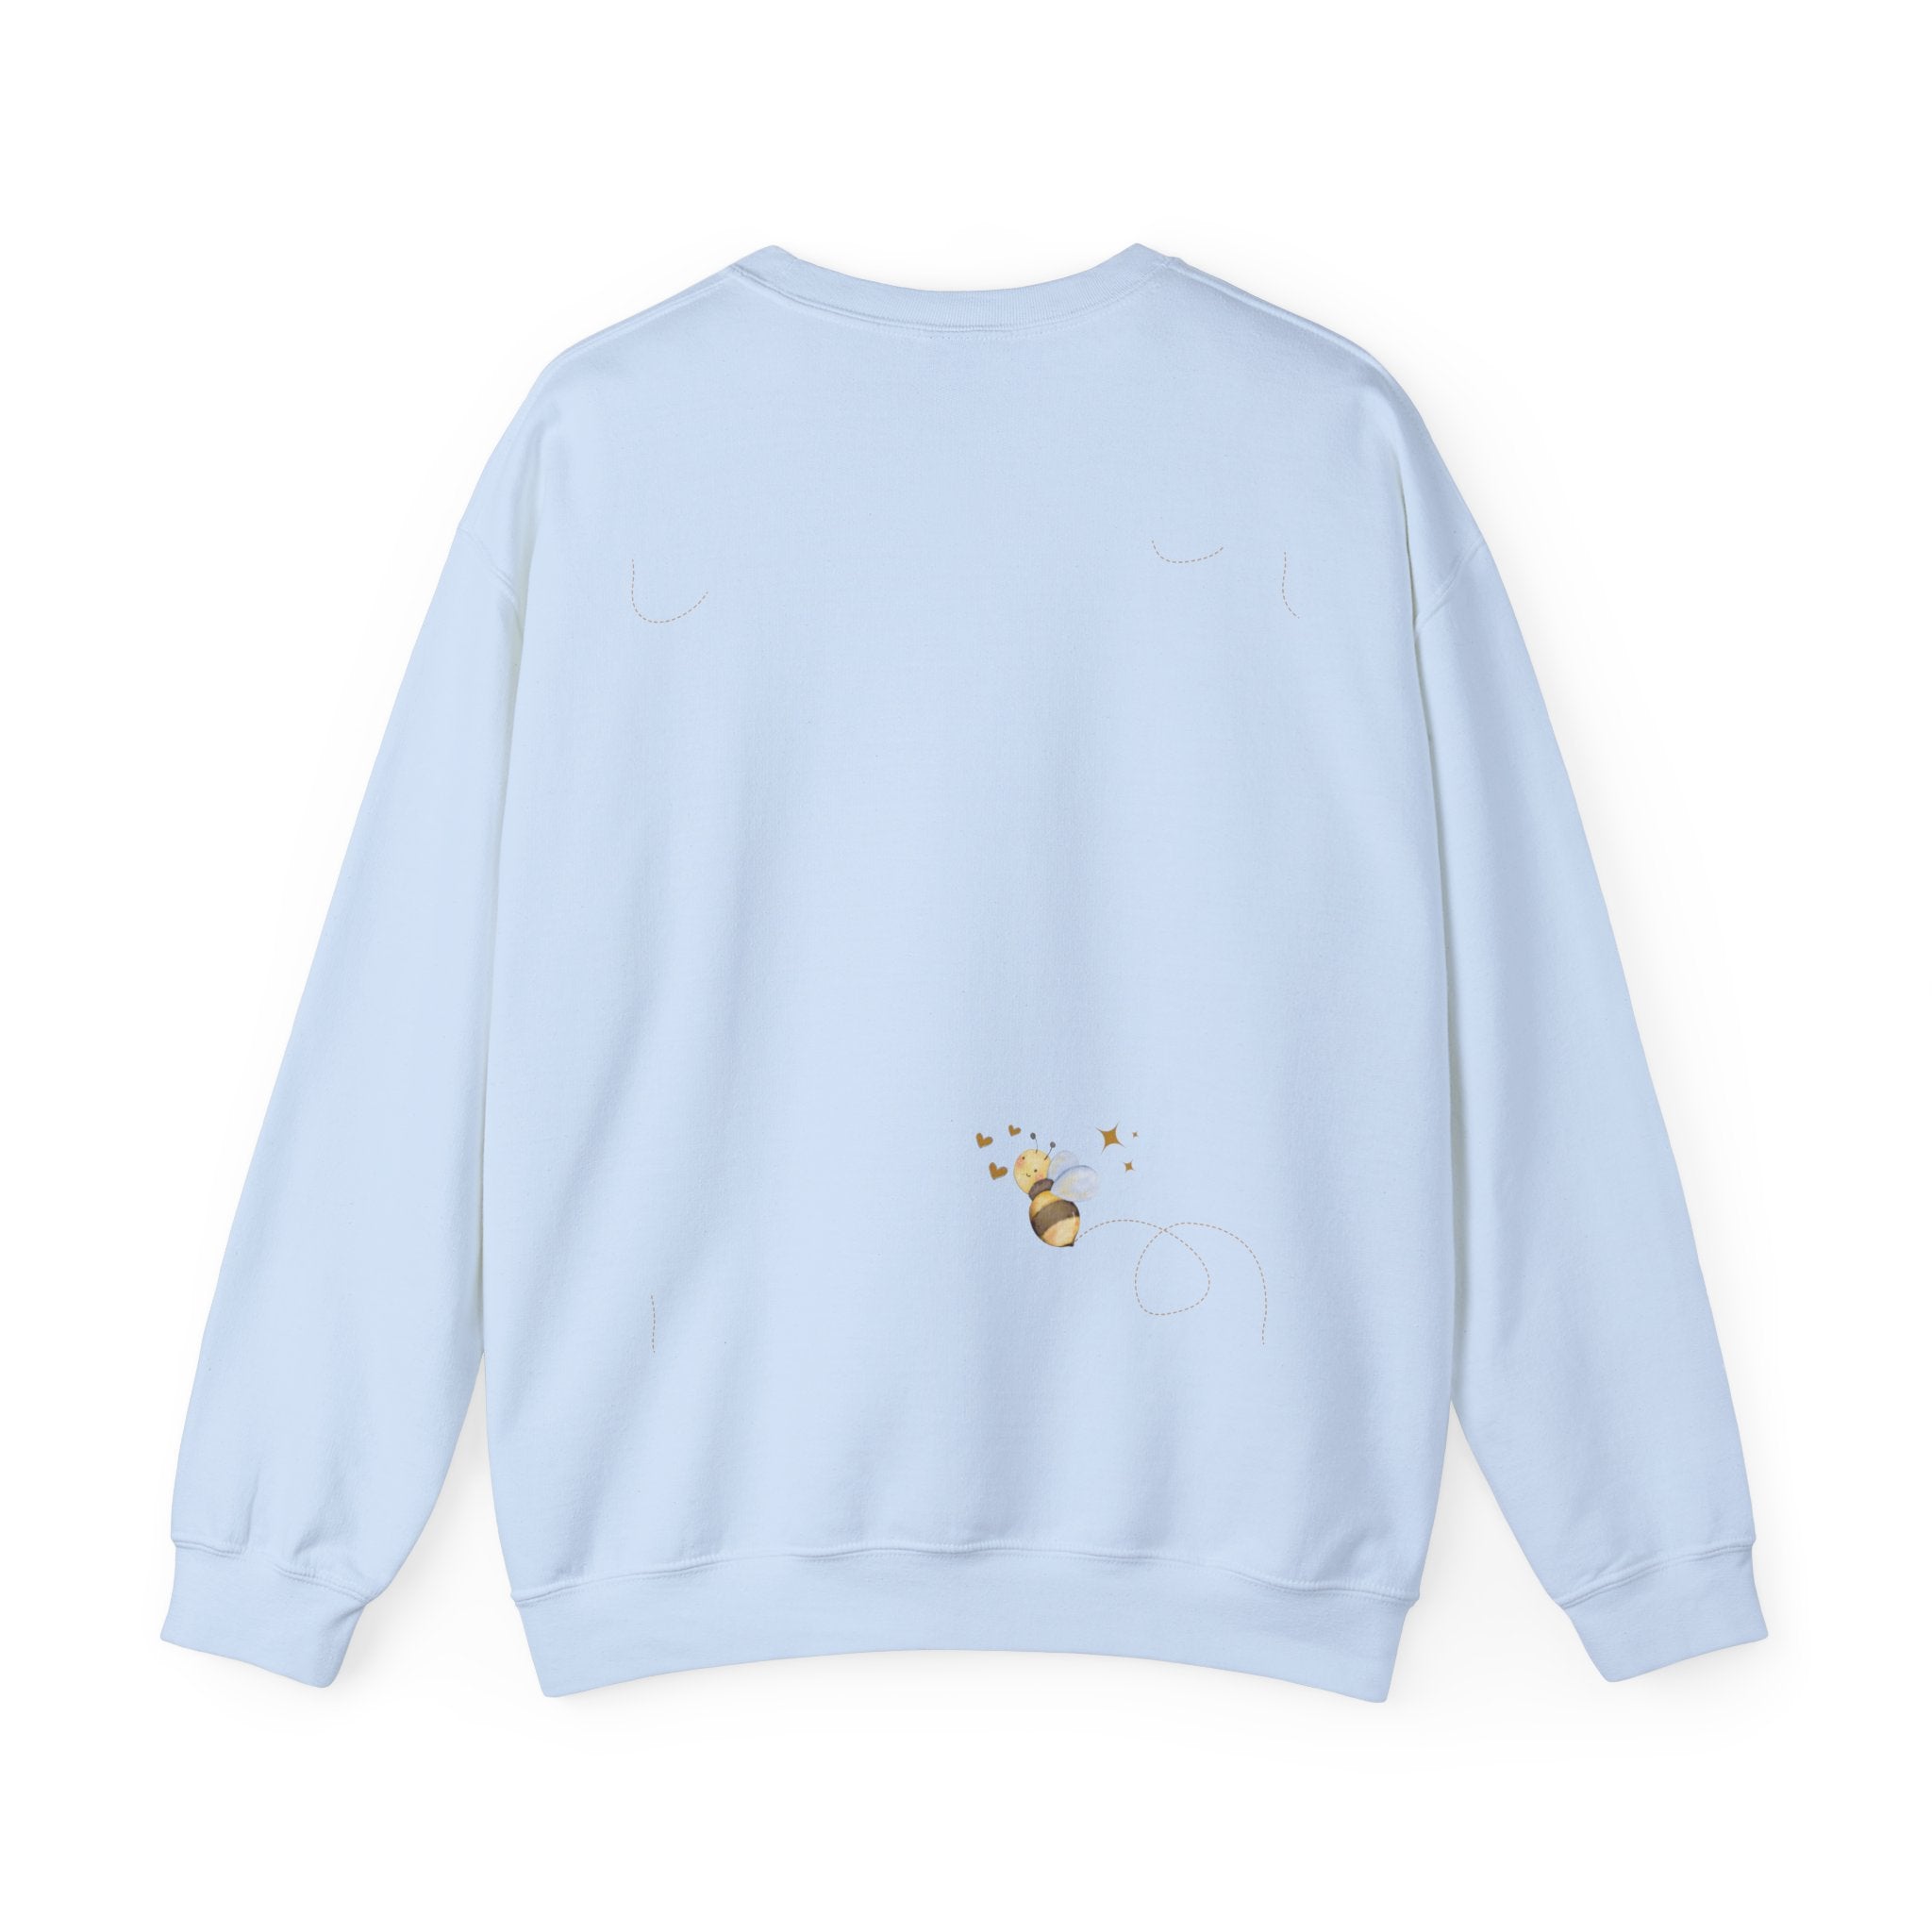 Bee u tiful ladies bumblebee sweatshirt, Ladies unisex sweatshirt